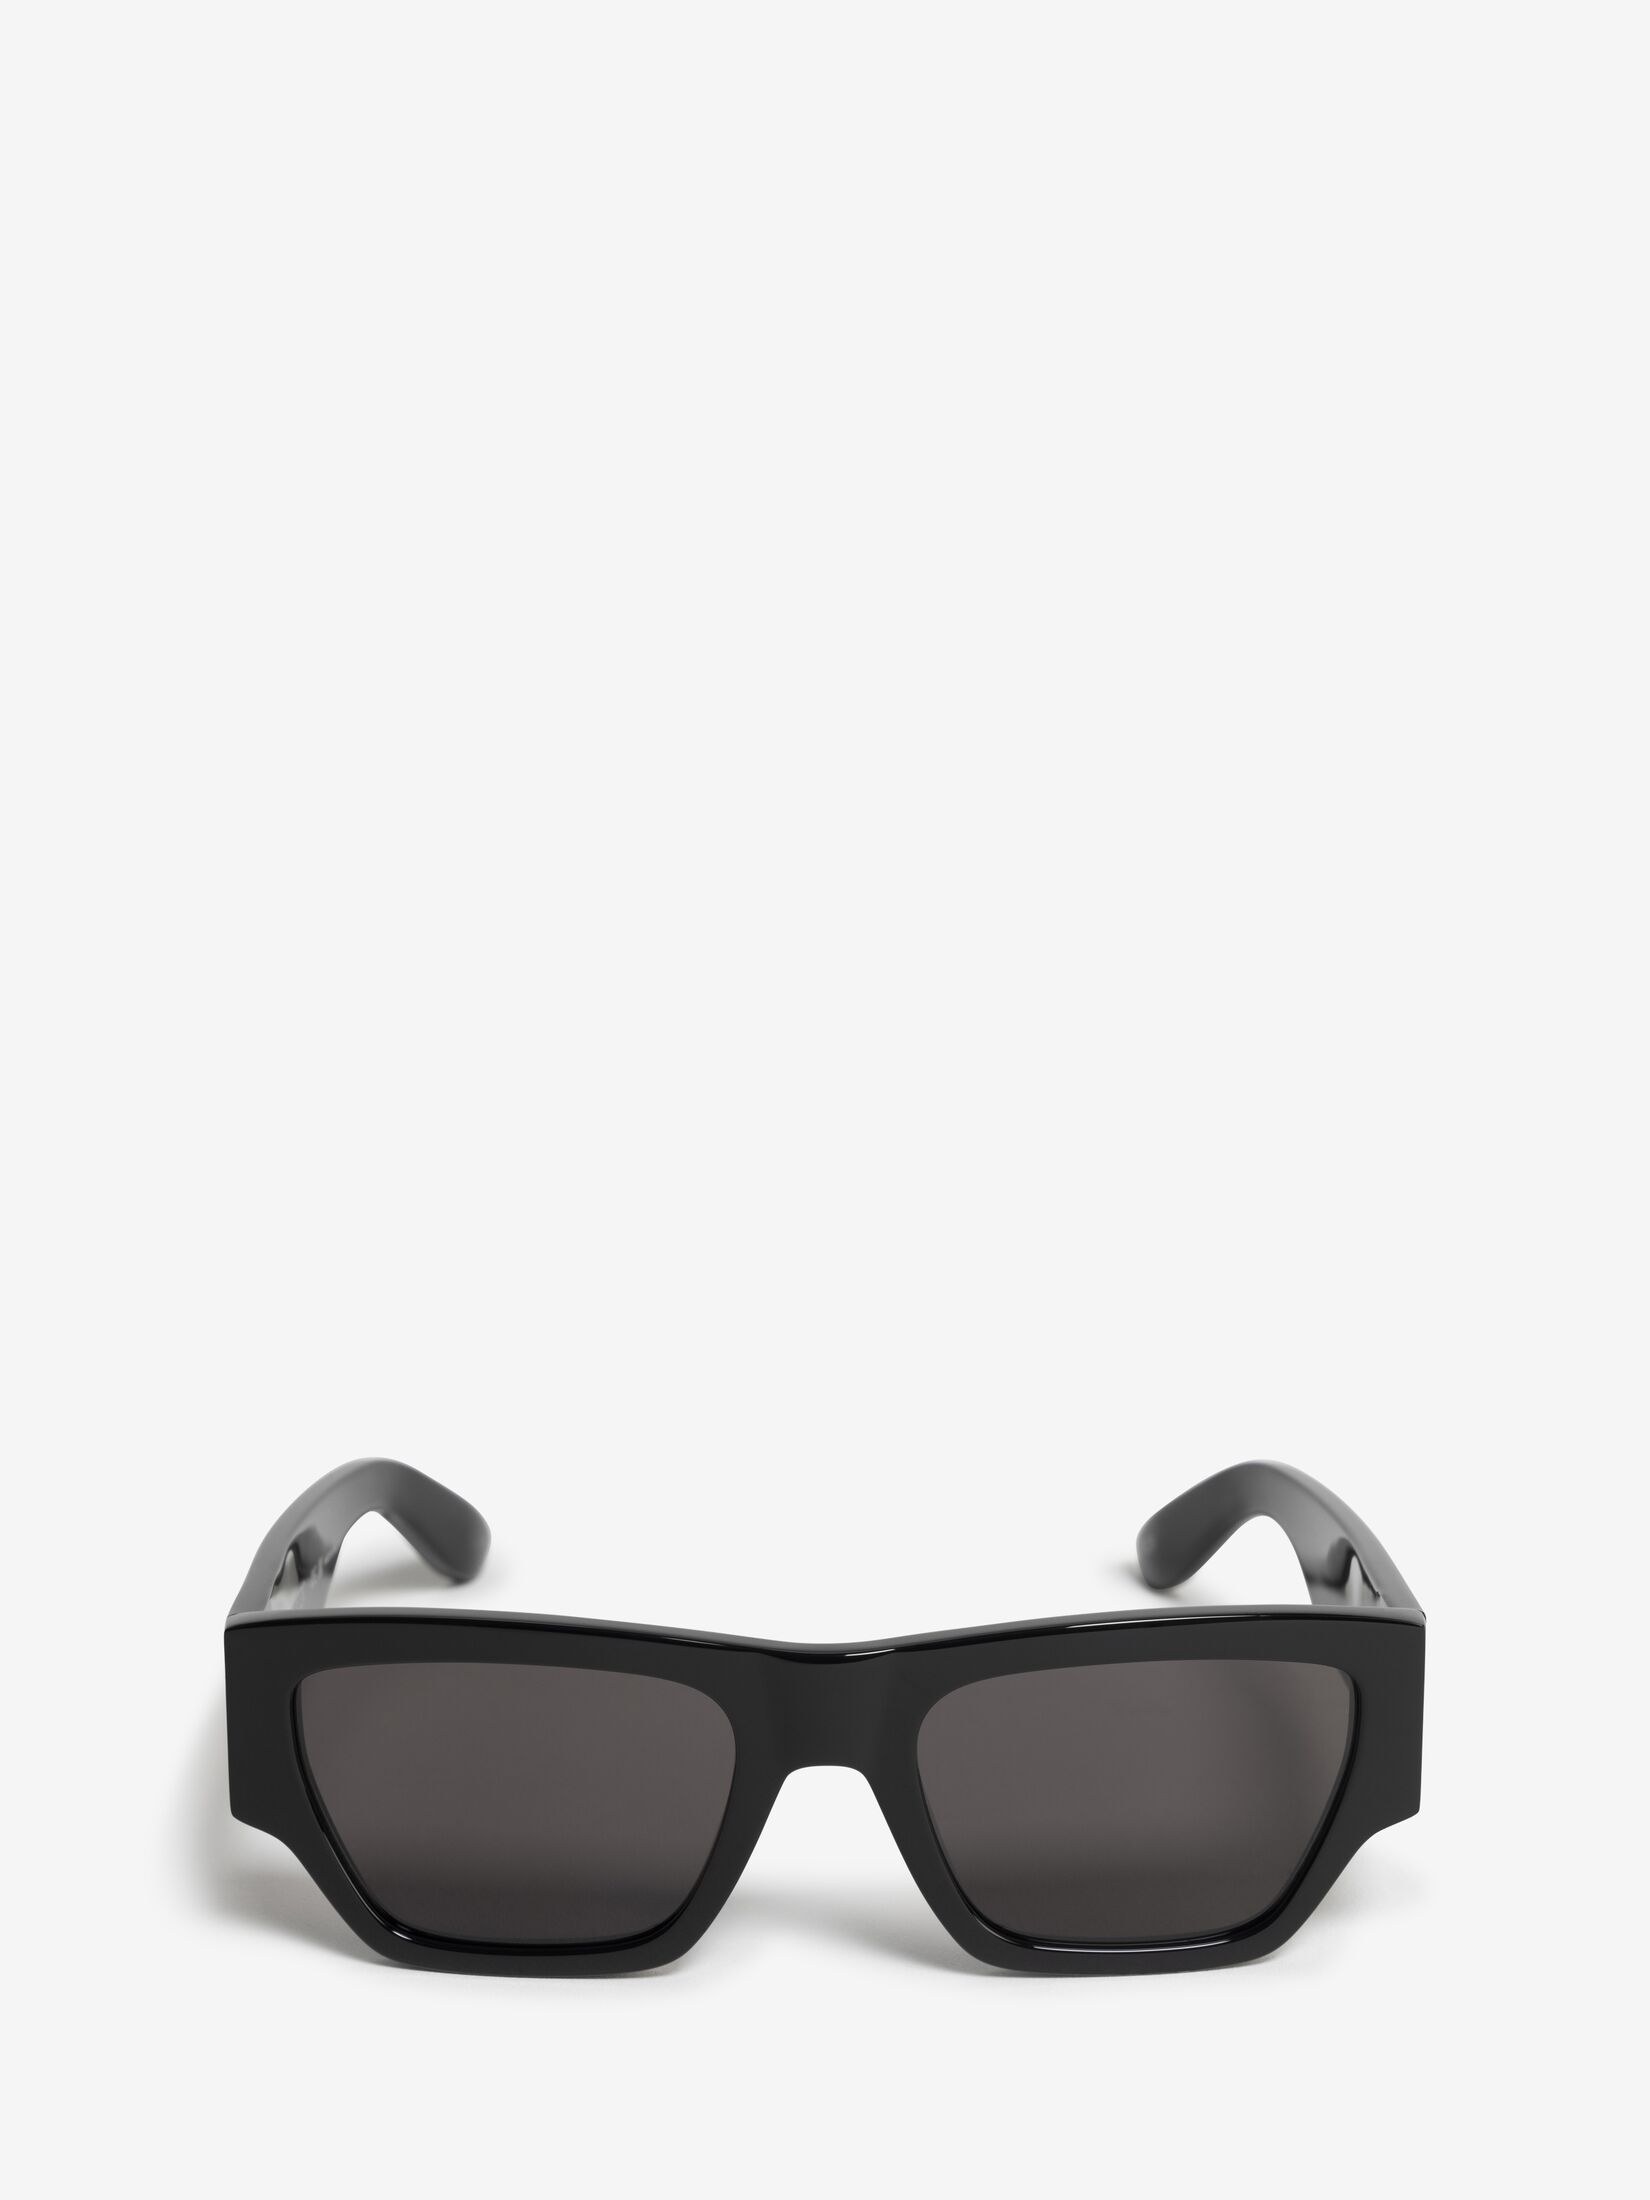 McQueen 앵글 직사각형 선글라스